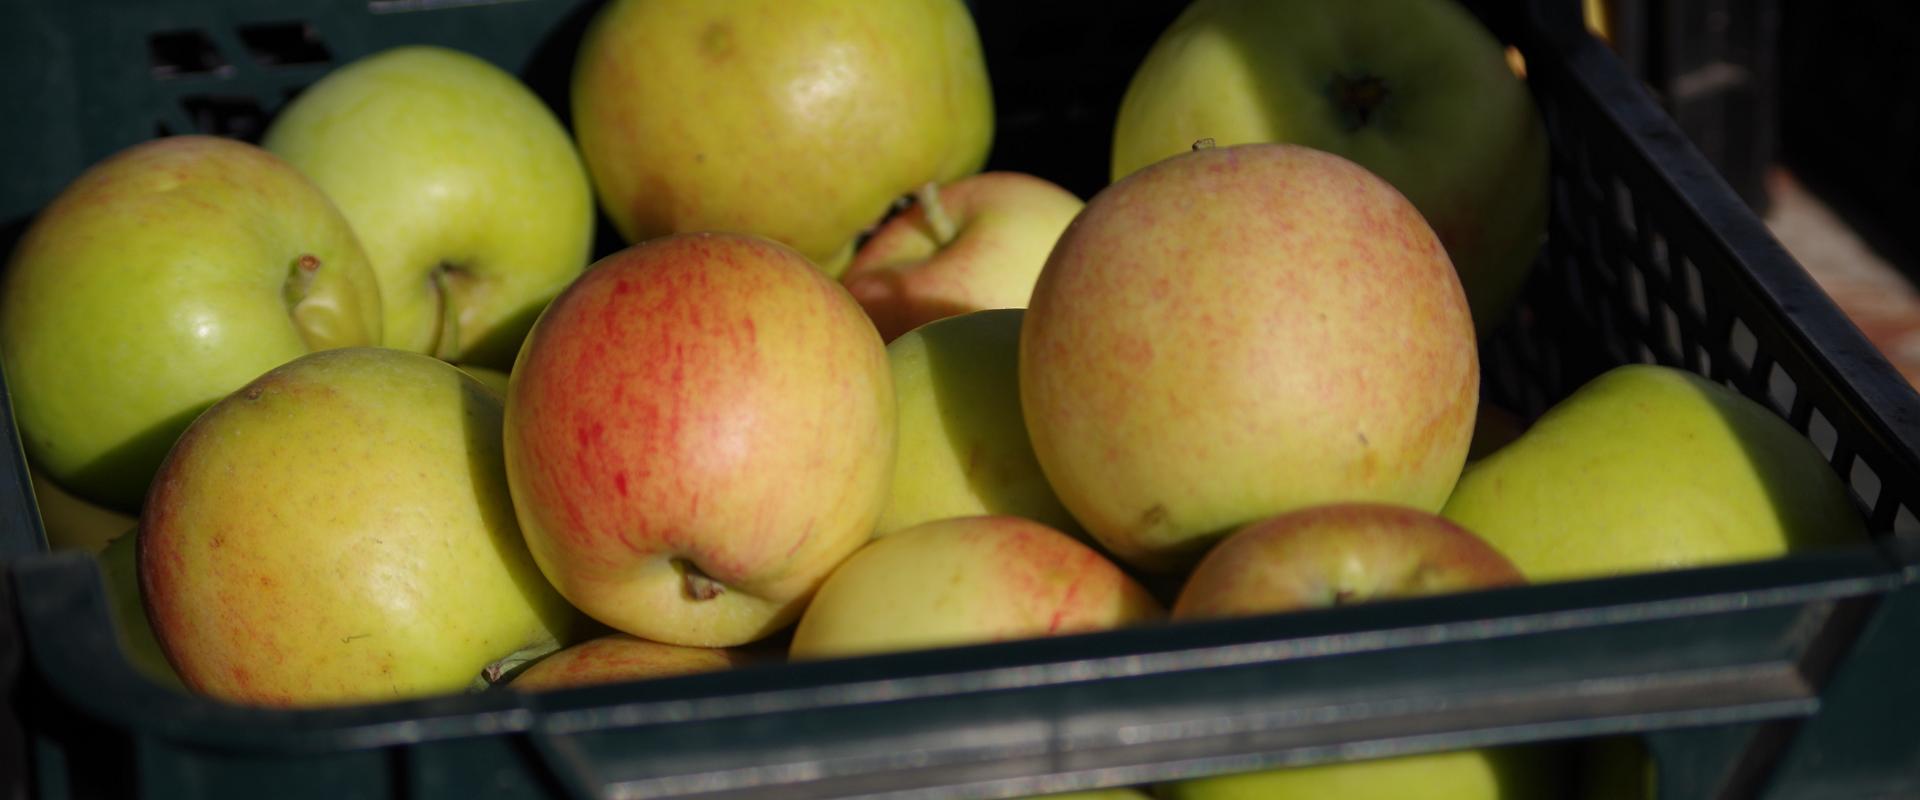 Freiluftmarkt in Tartu: estnische Äpfel